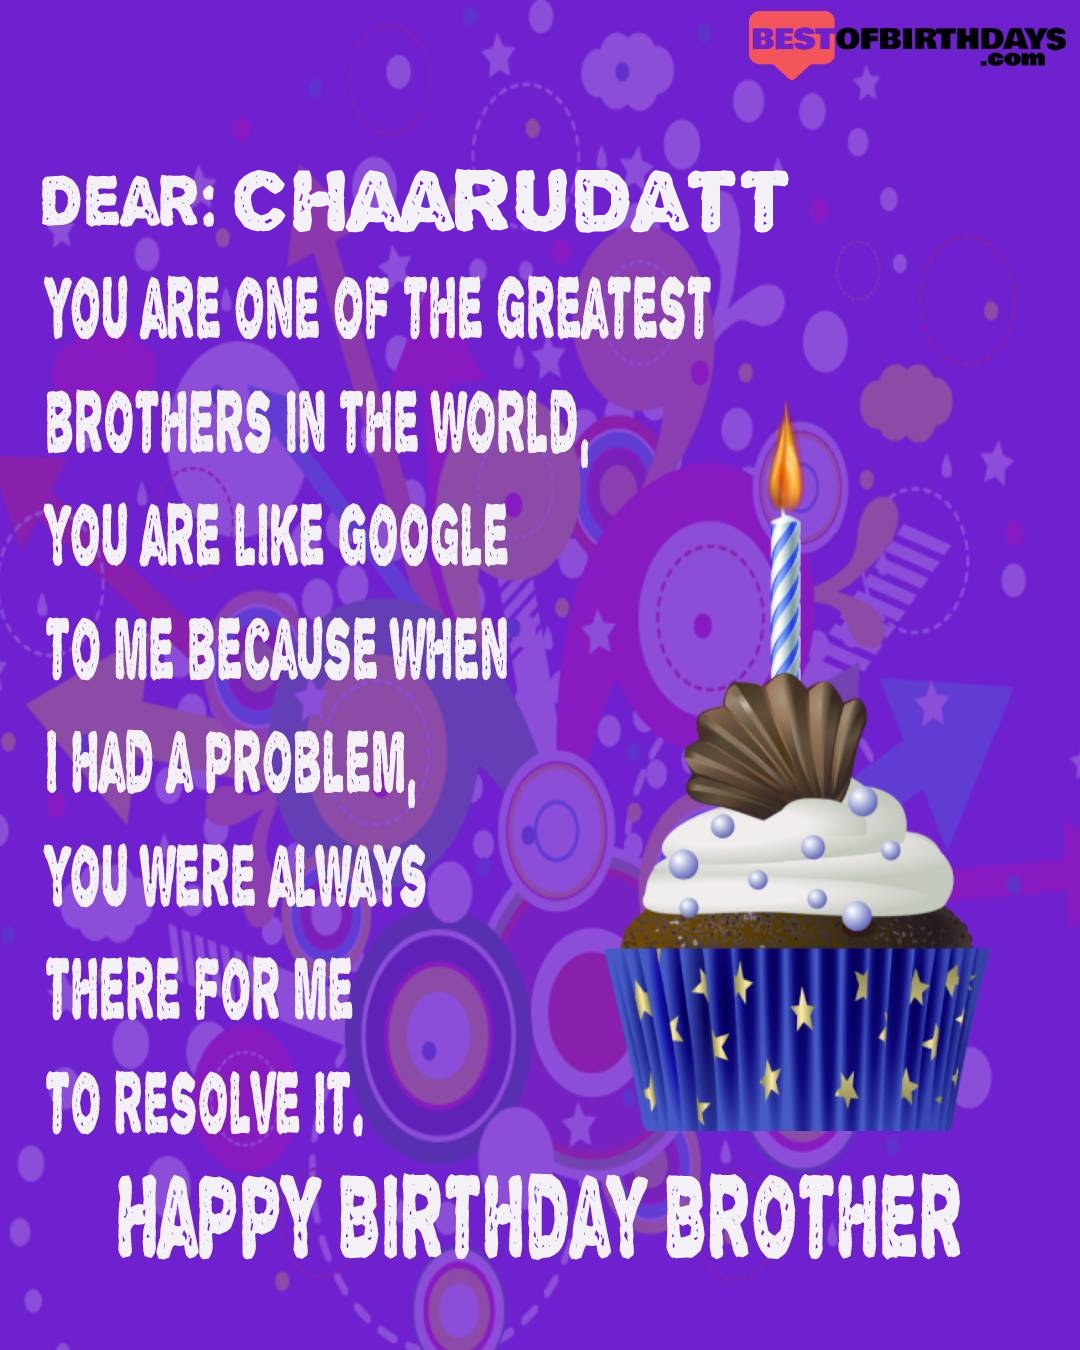 Happy birthday chaarudatt bhai brother bro